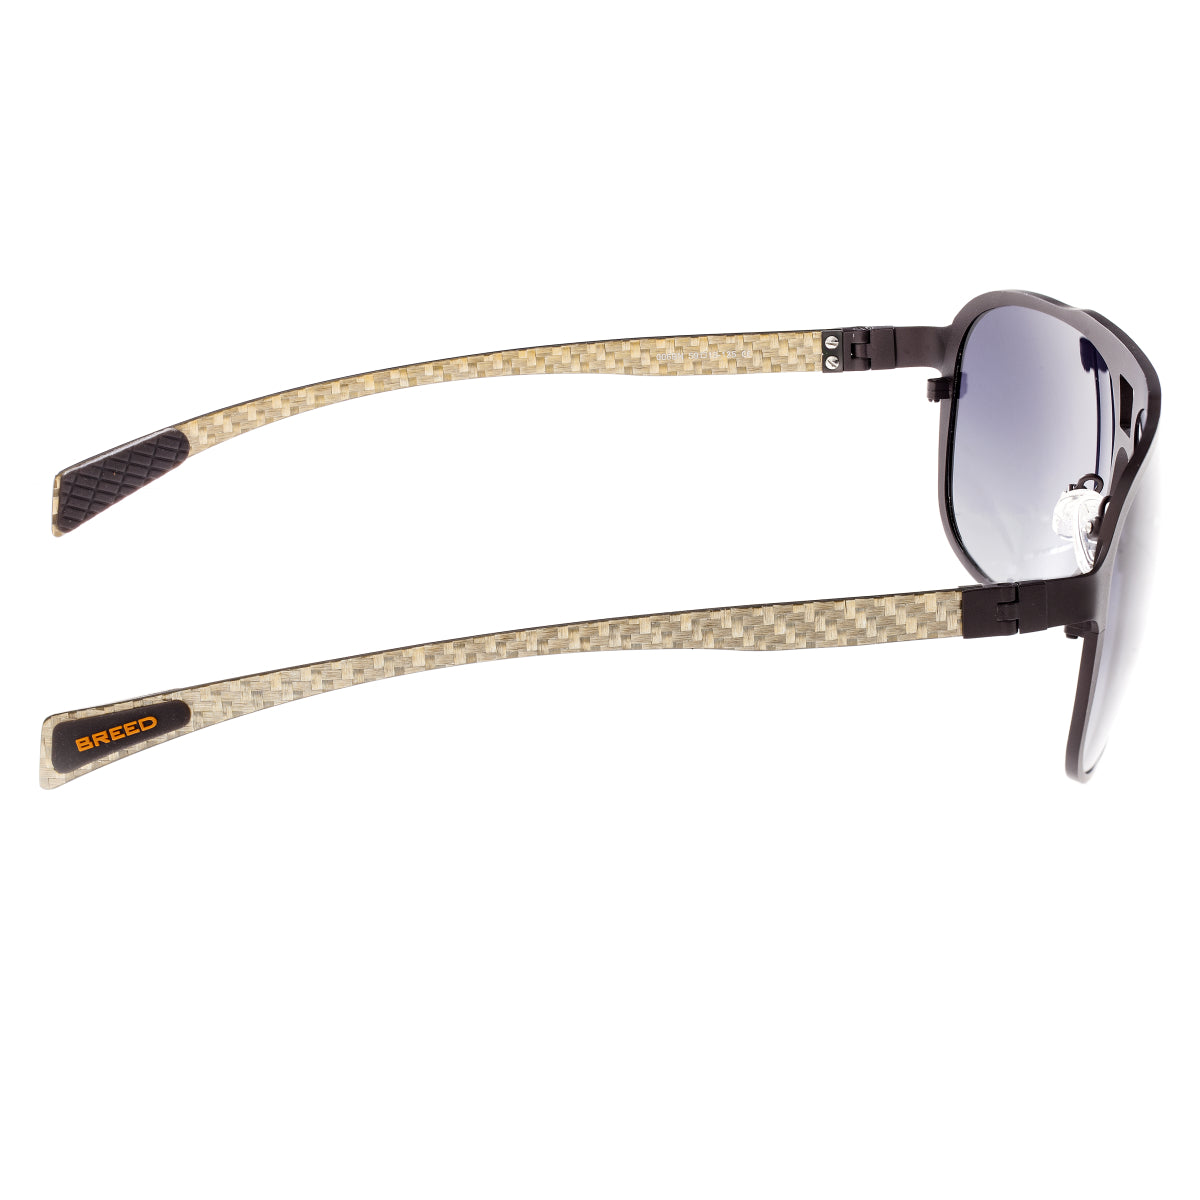 Breed Apollo Titanium and Carbon Fiber Polarized Sunglasses - Brown/Black - BSG006BN